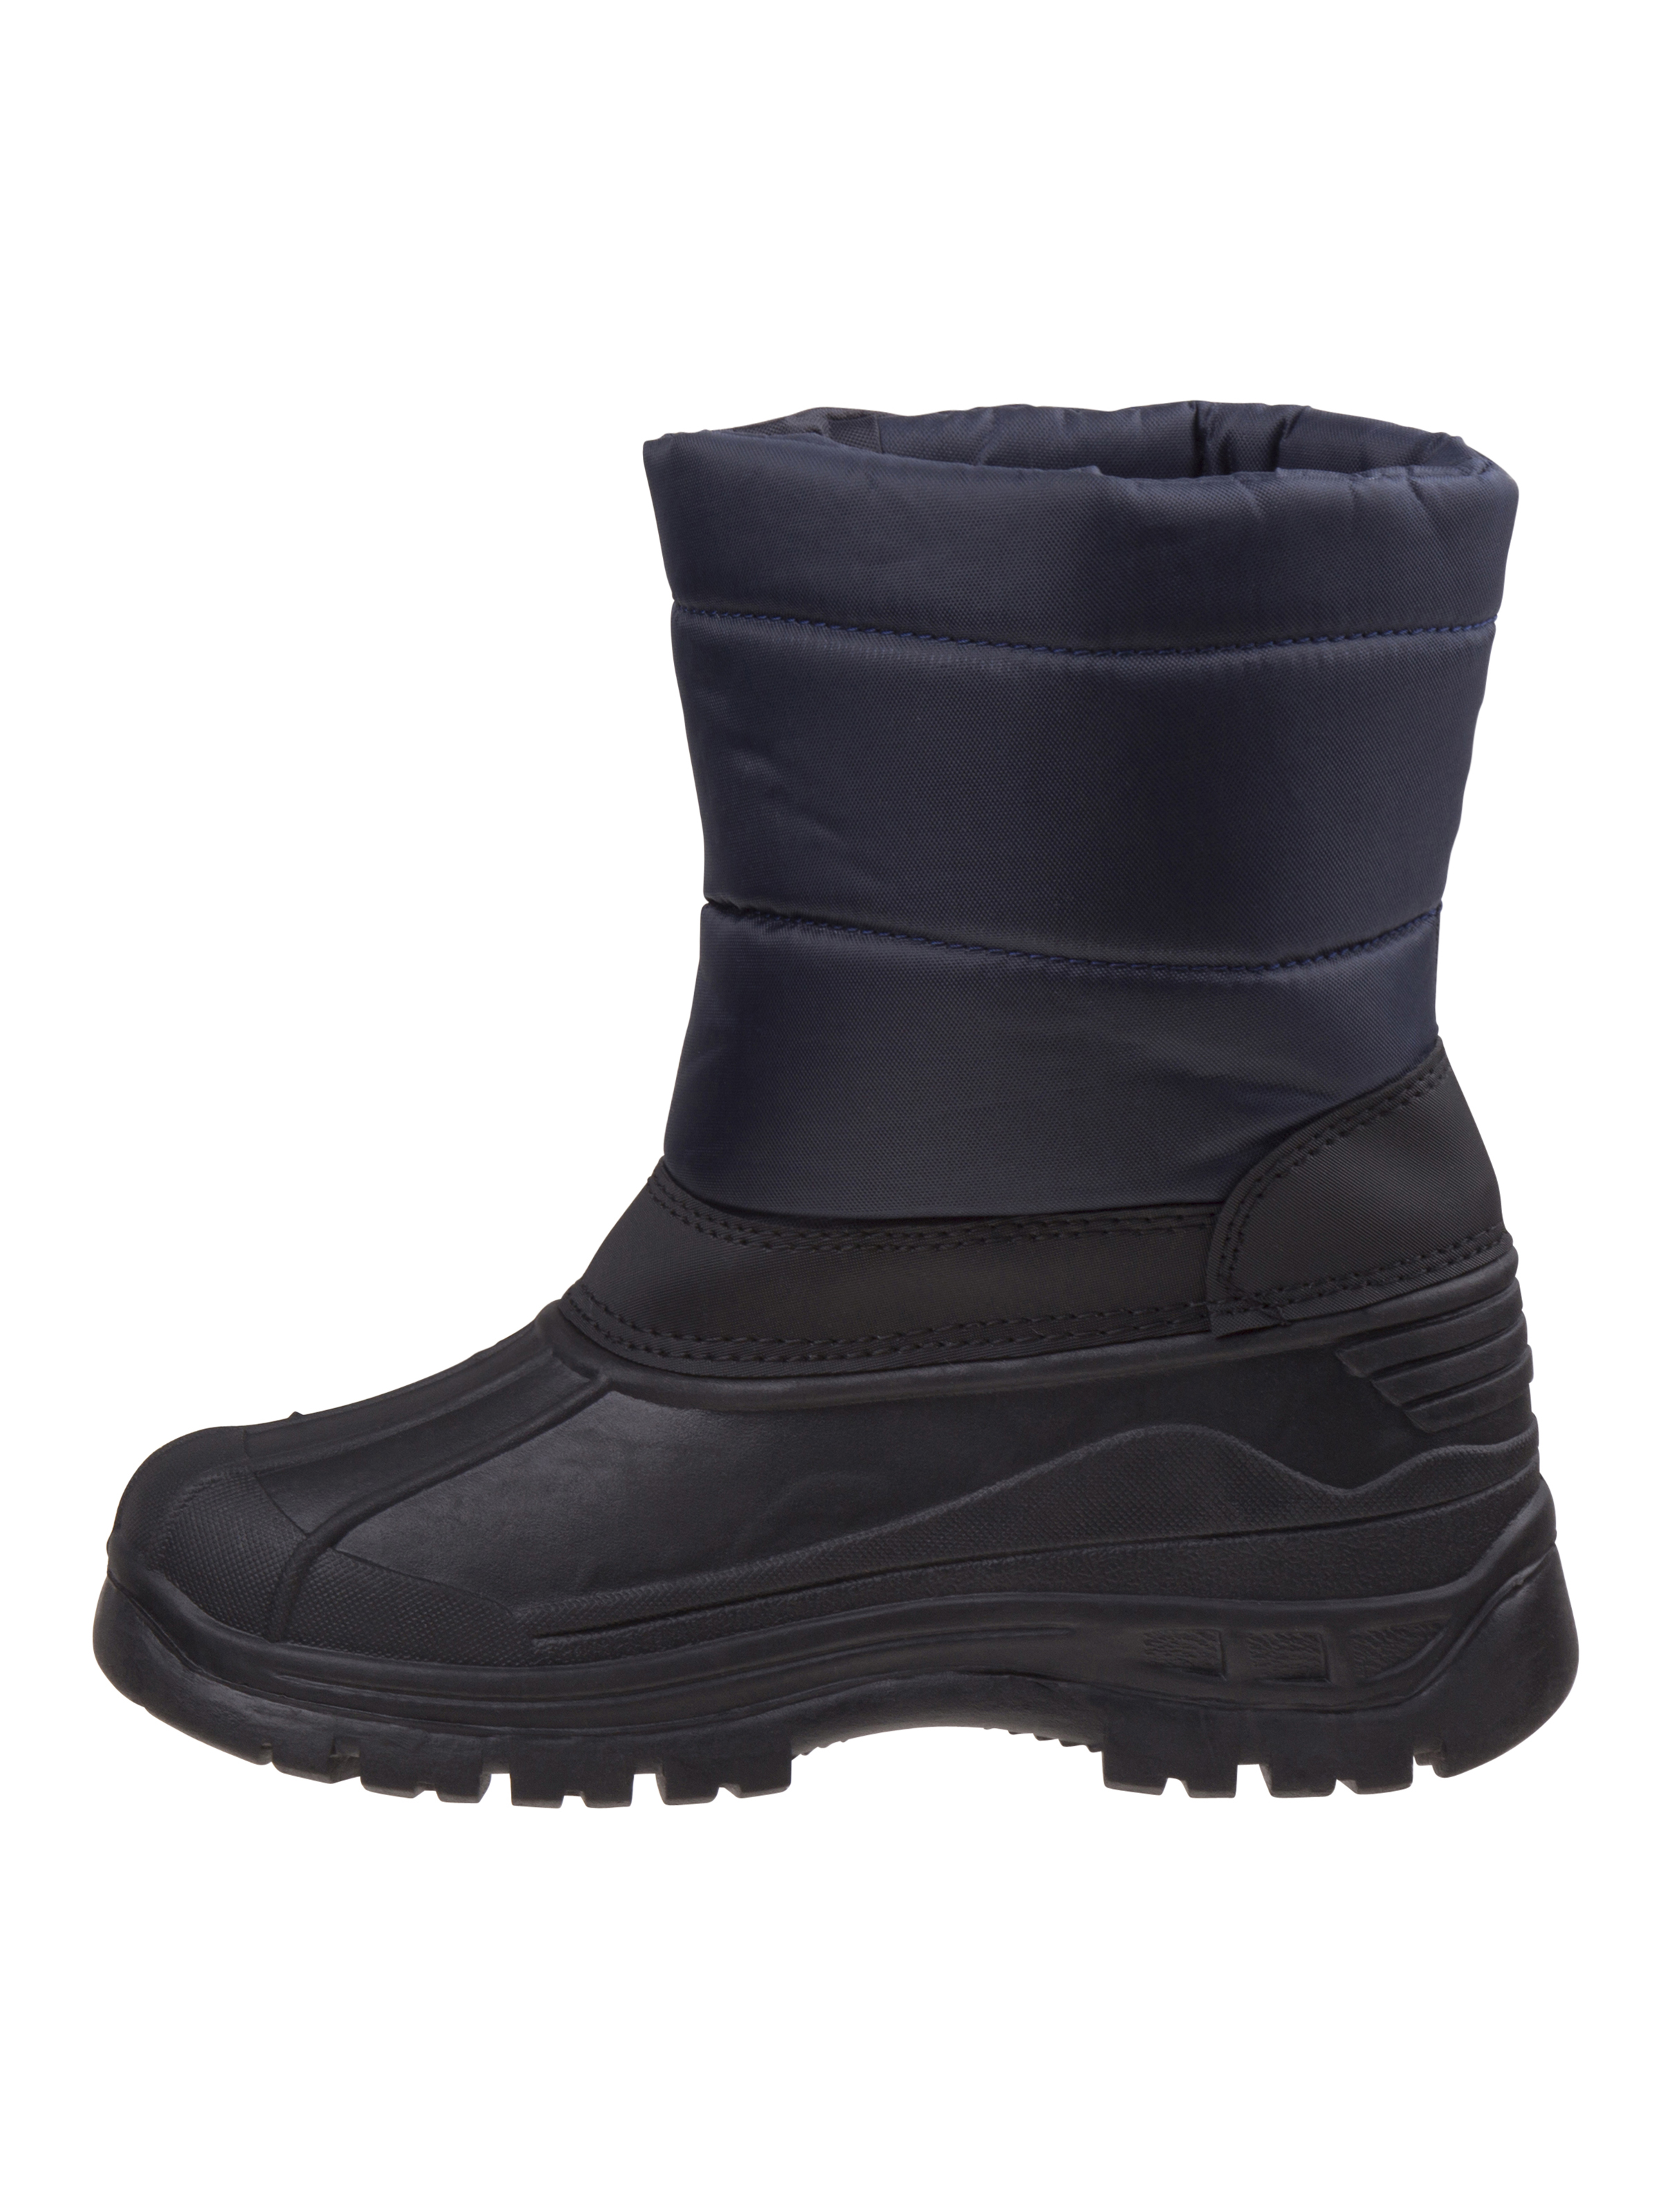 Rugger Bear Boys' Velcro Snow Boots - image 2 of 5